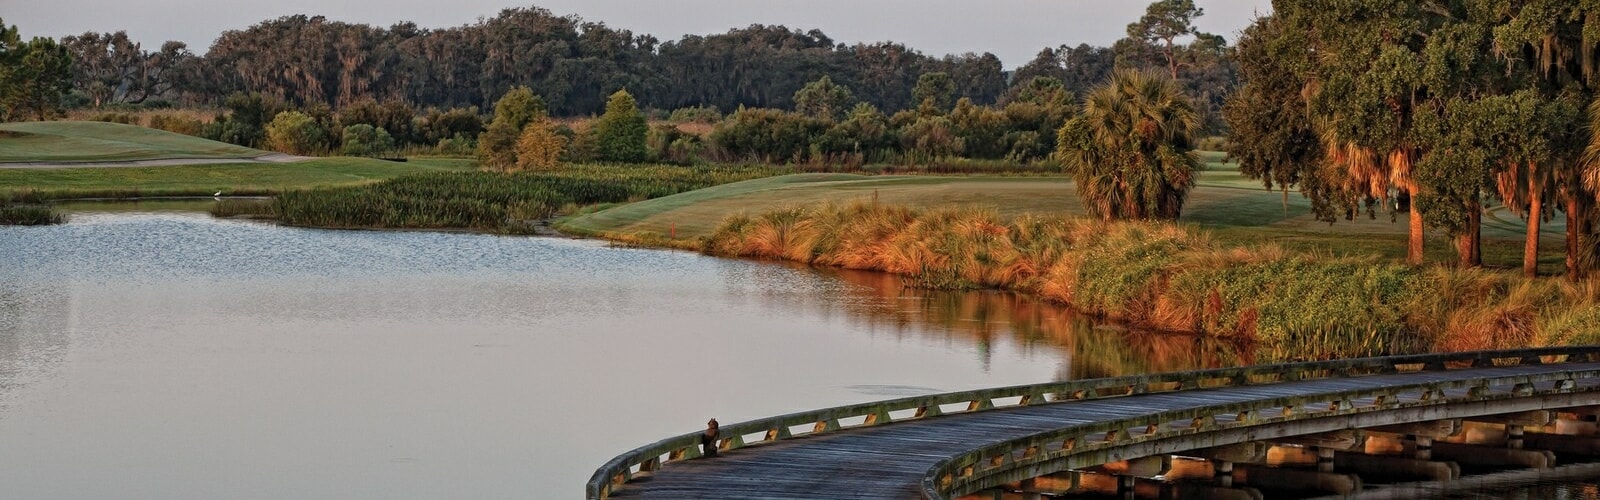 Golf Course Lake and Bridge